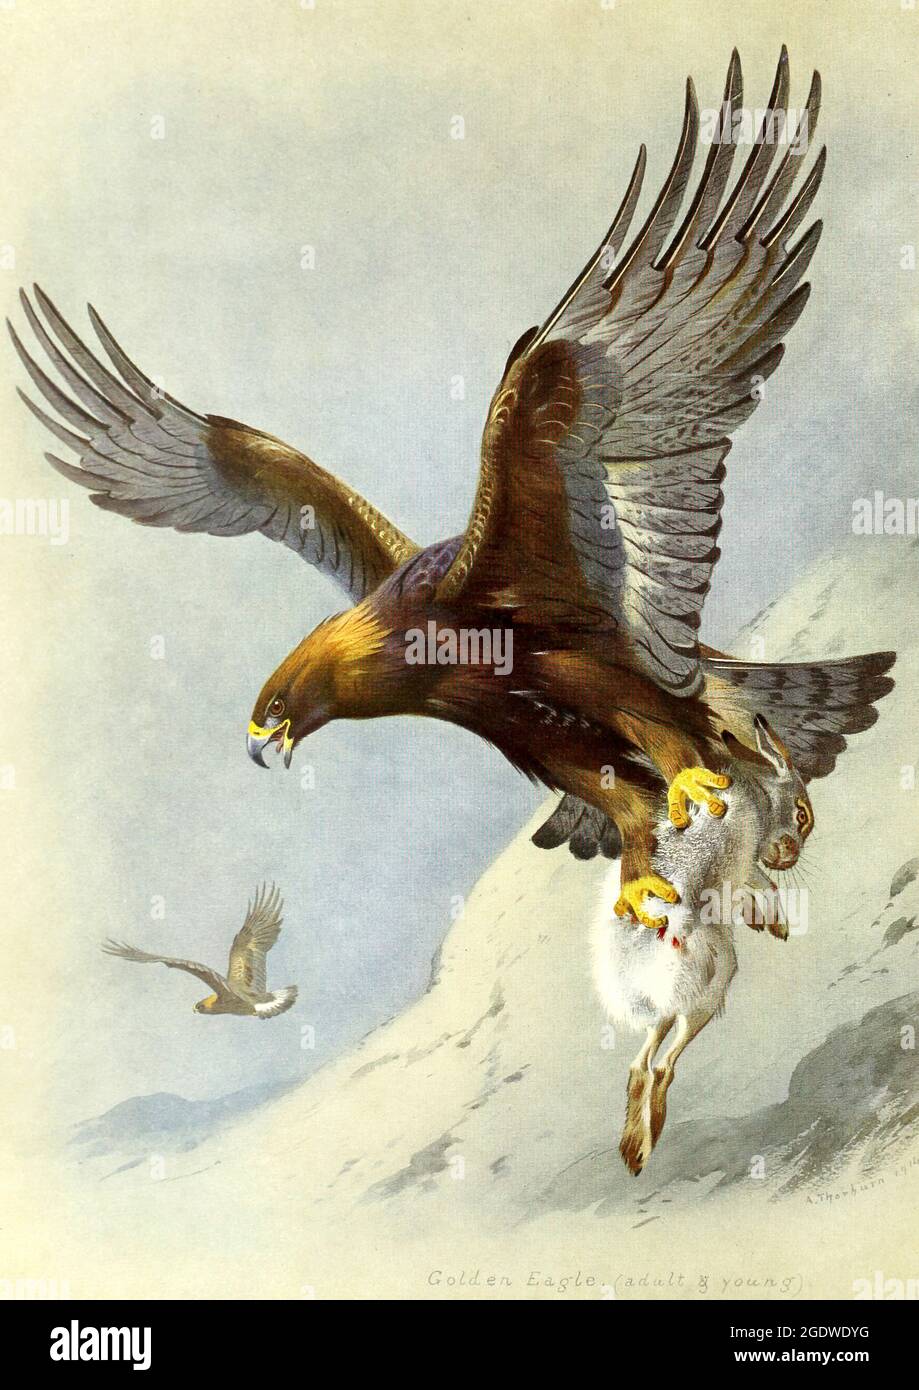 Archibald Thorburn vintage British bird illustration - Golden Eagle Stock Photo